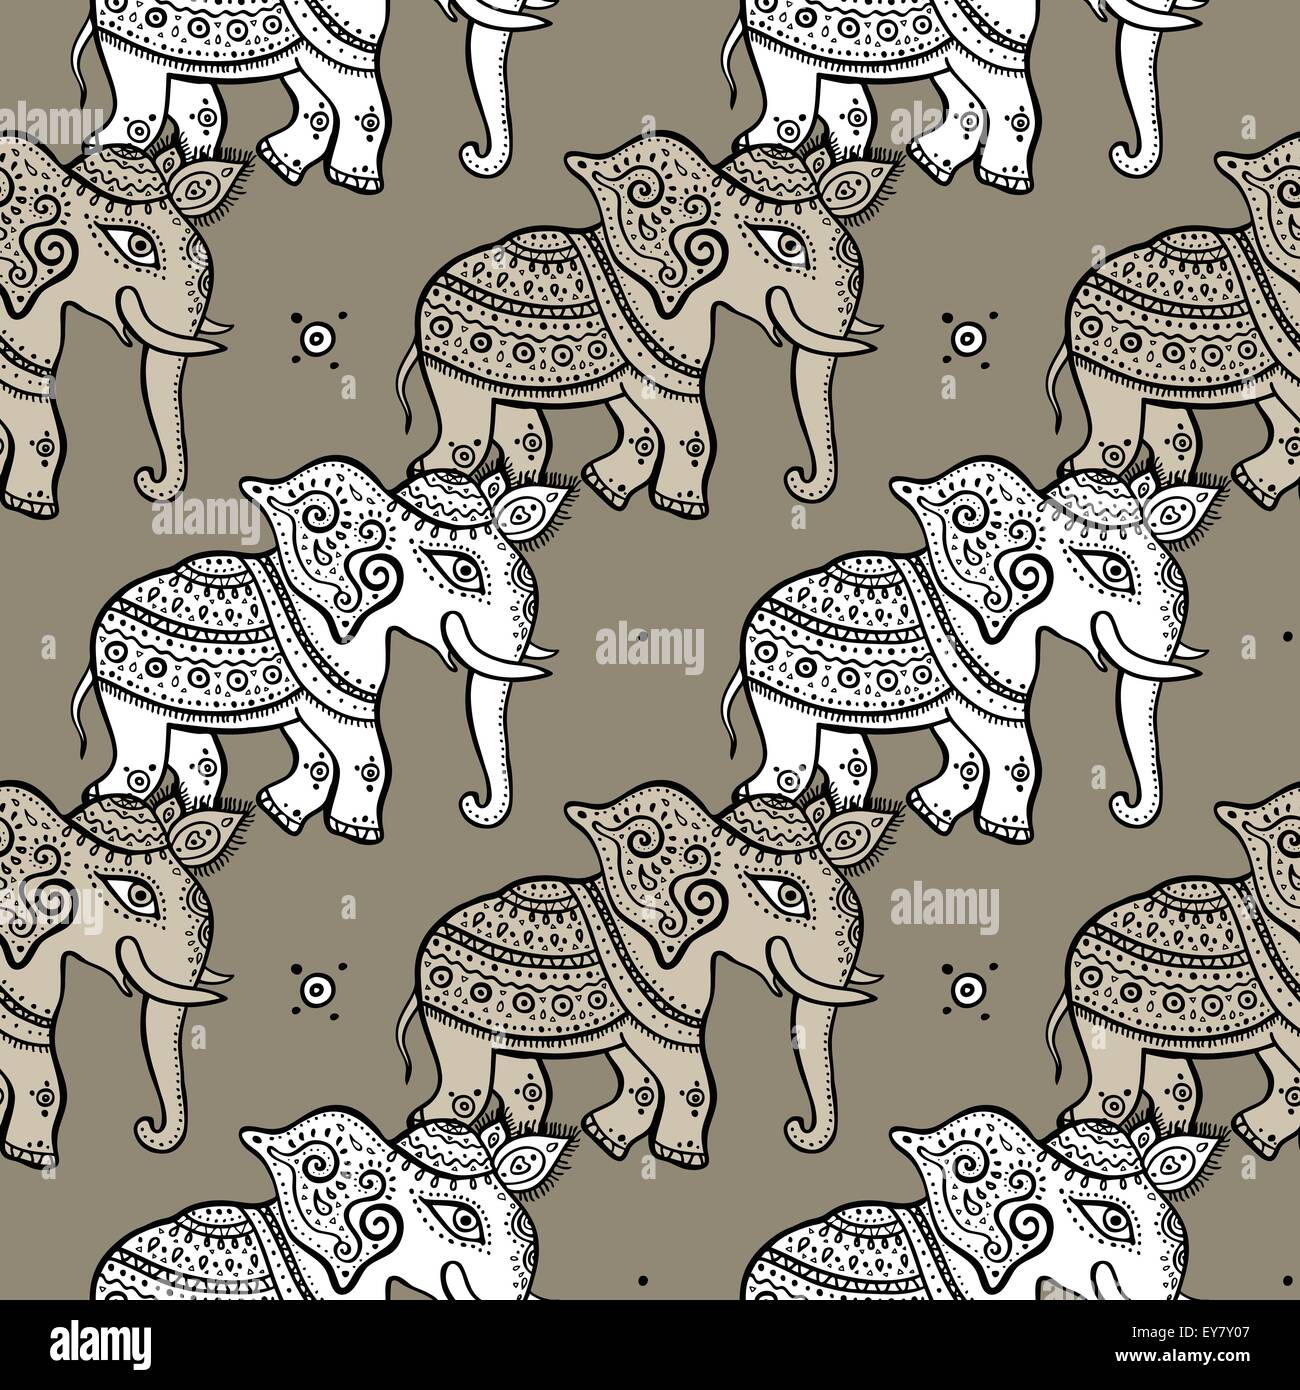 Elephants. Seamless pattern. Stock Vector